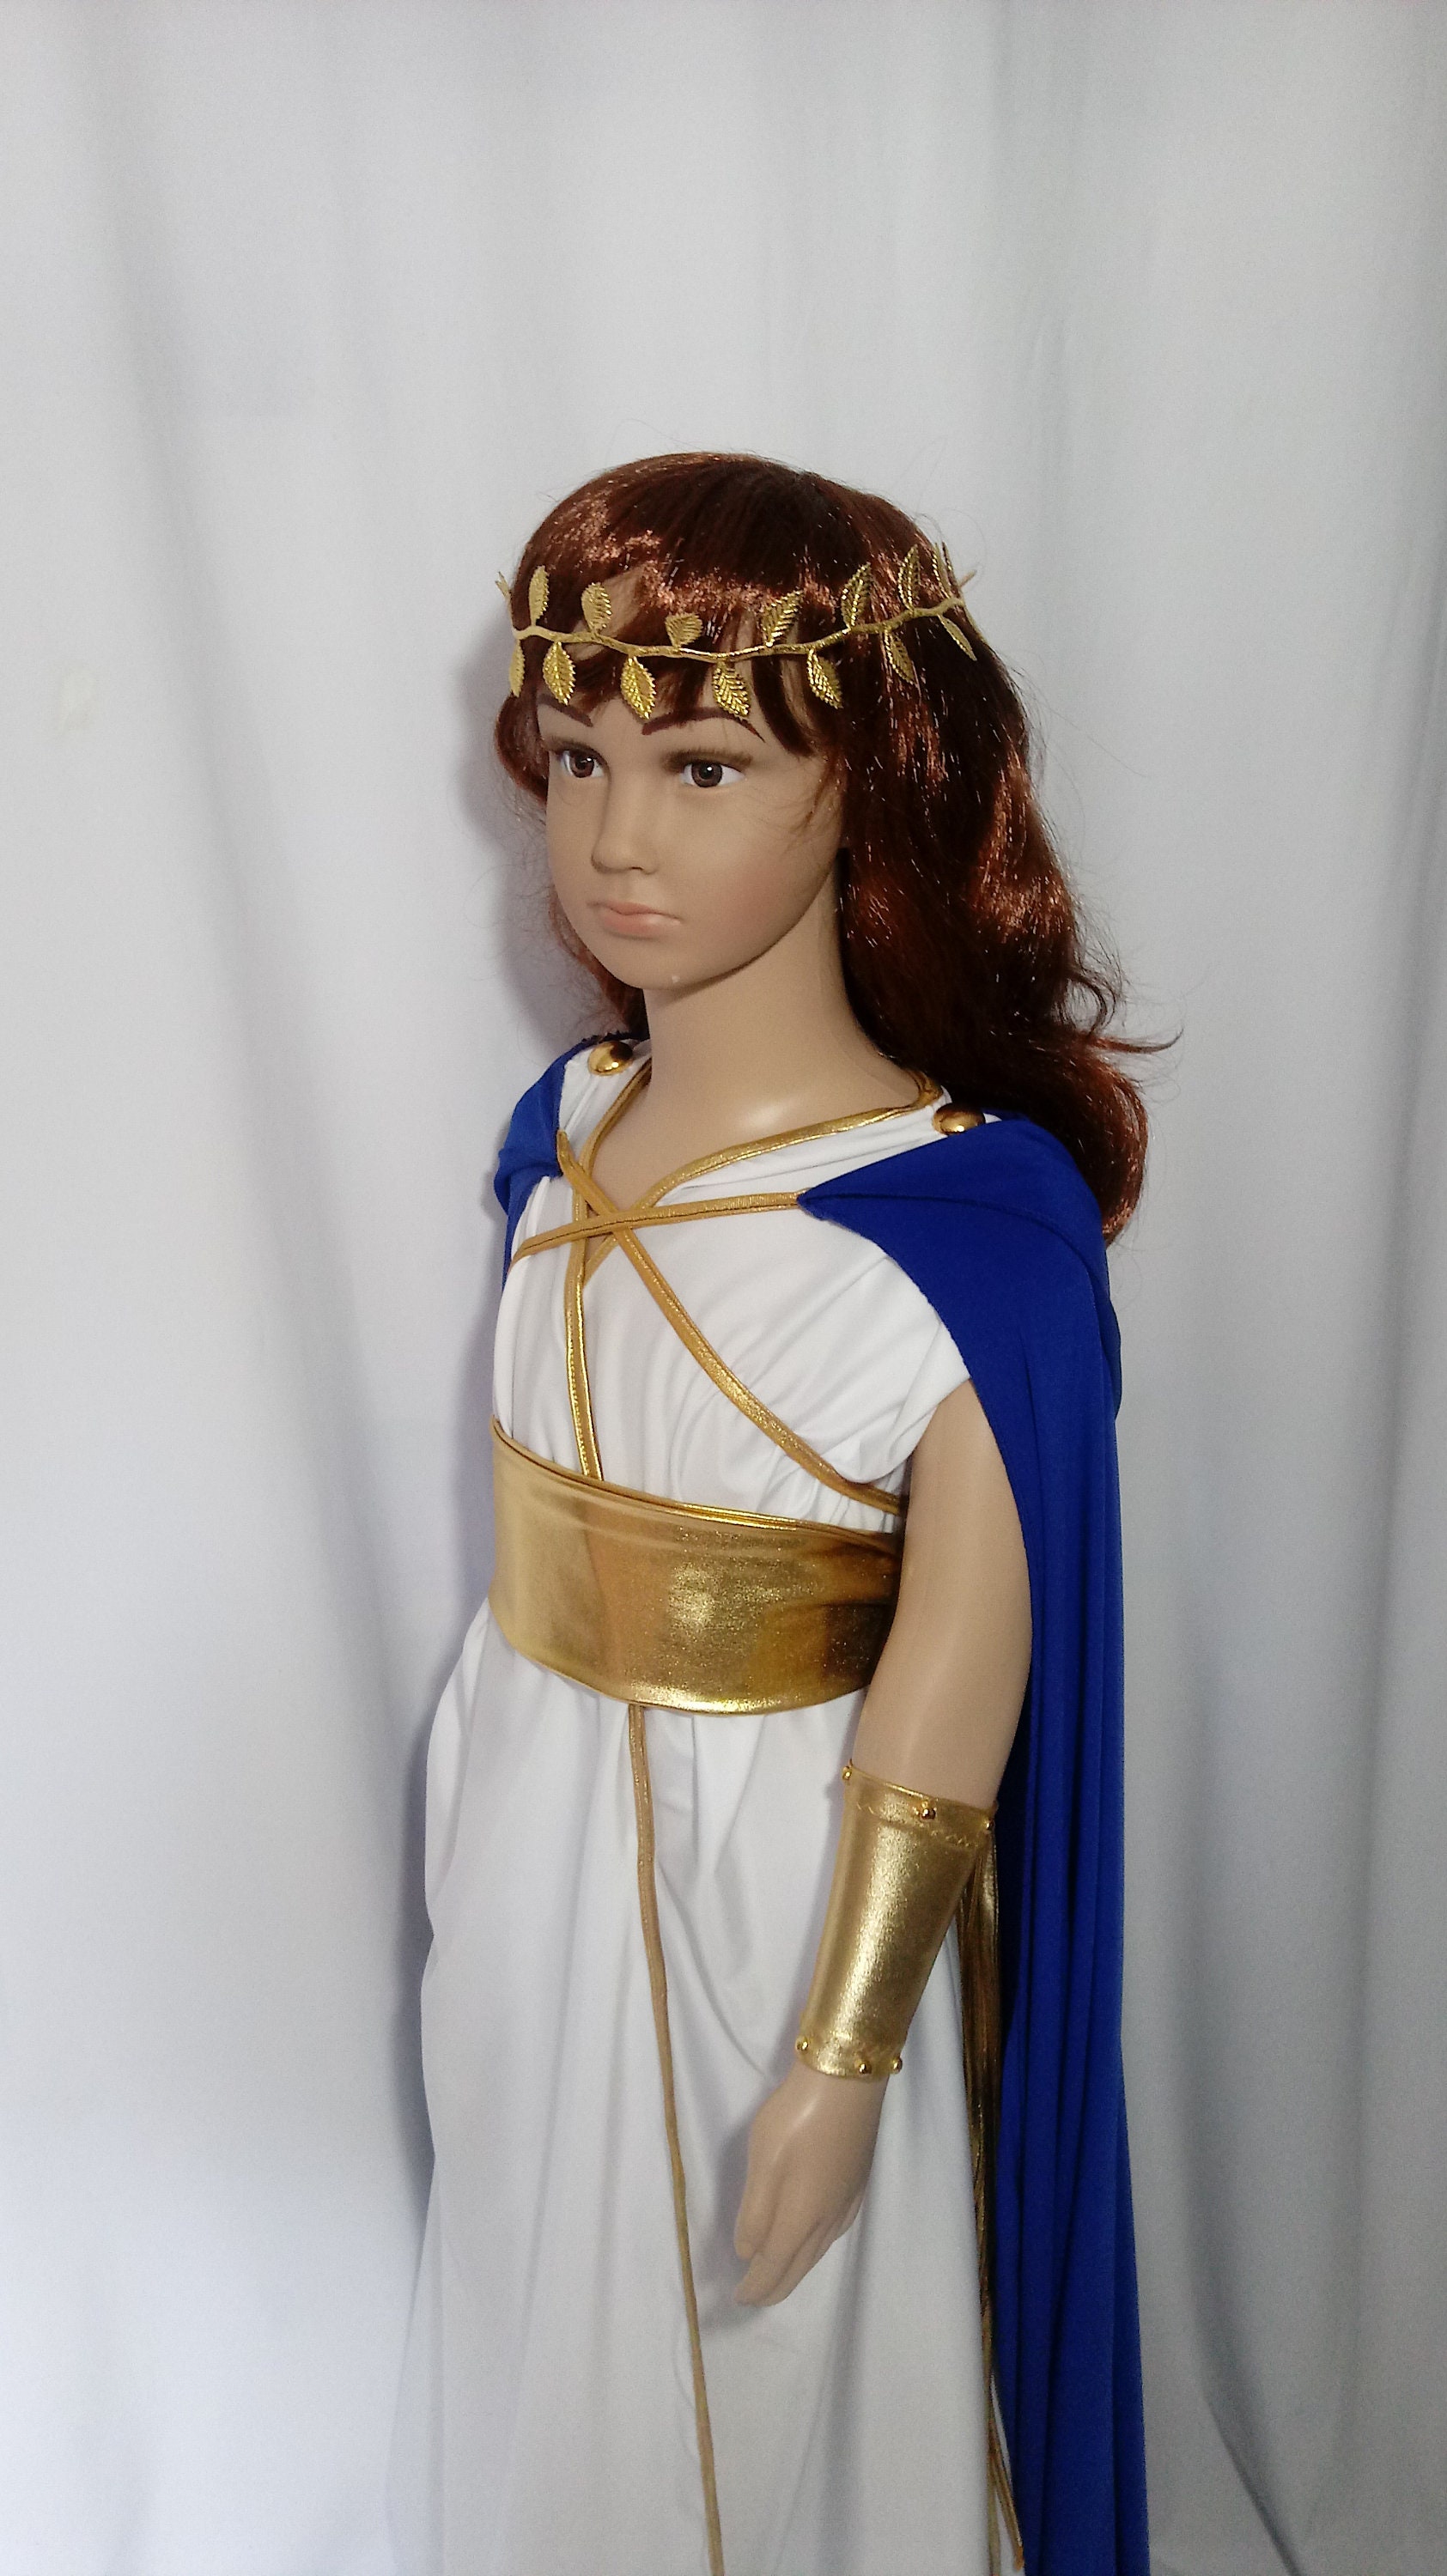 Womens Athena Adult Greek Goddess Costume - Mr. Costumes